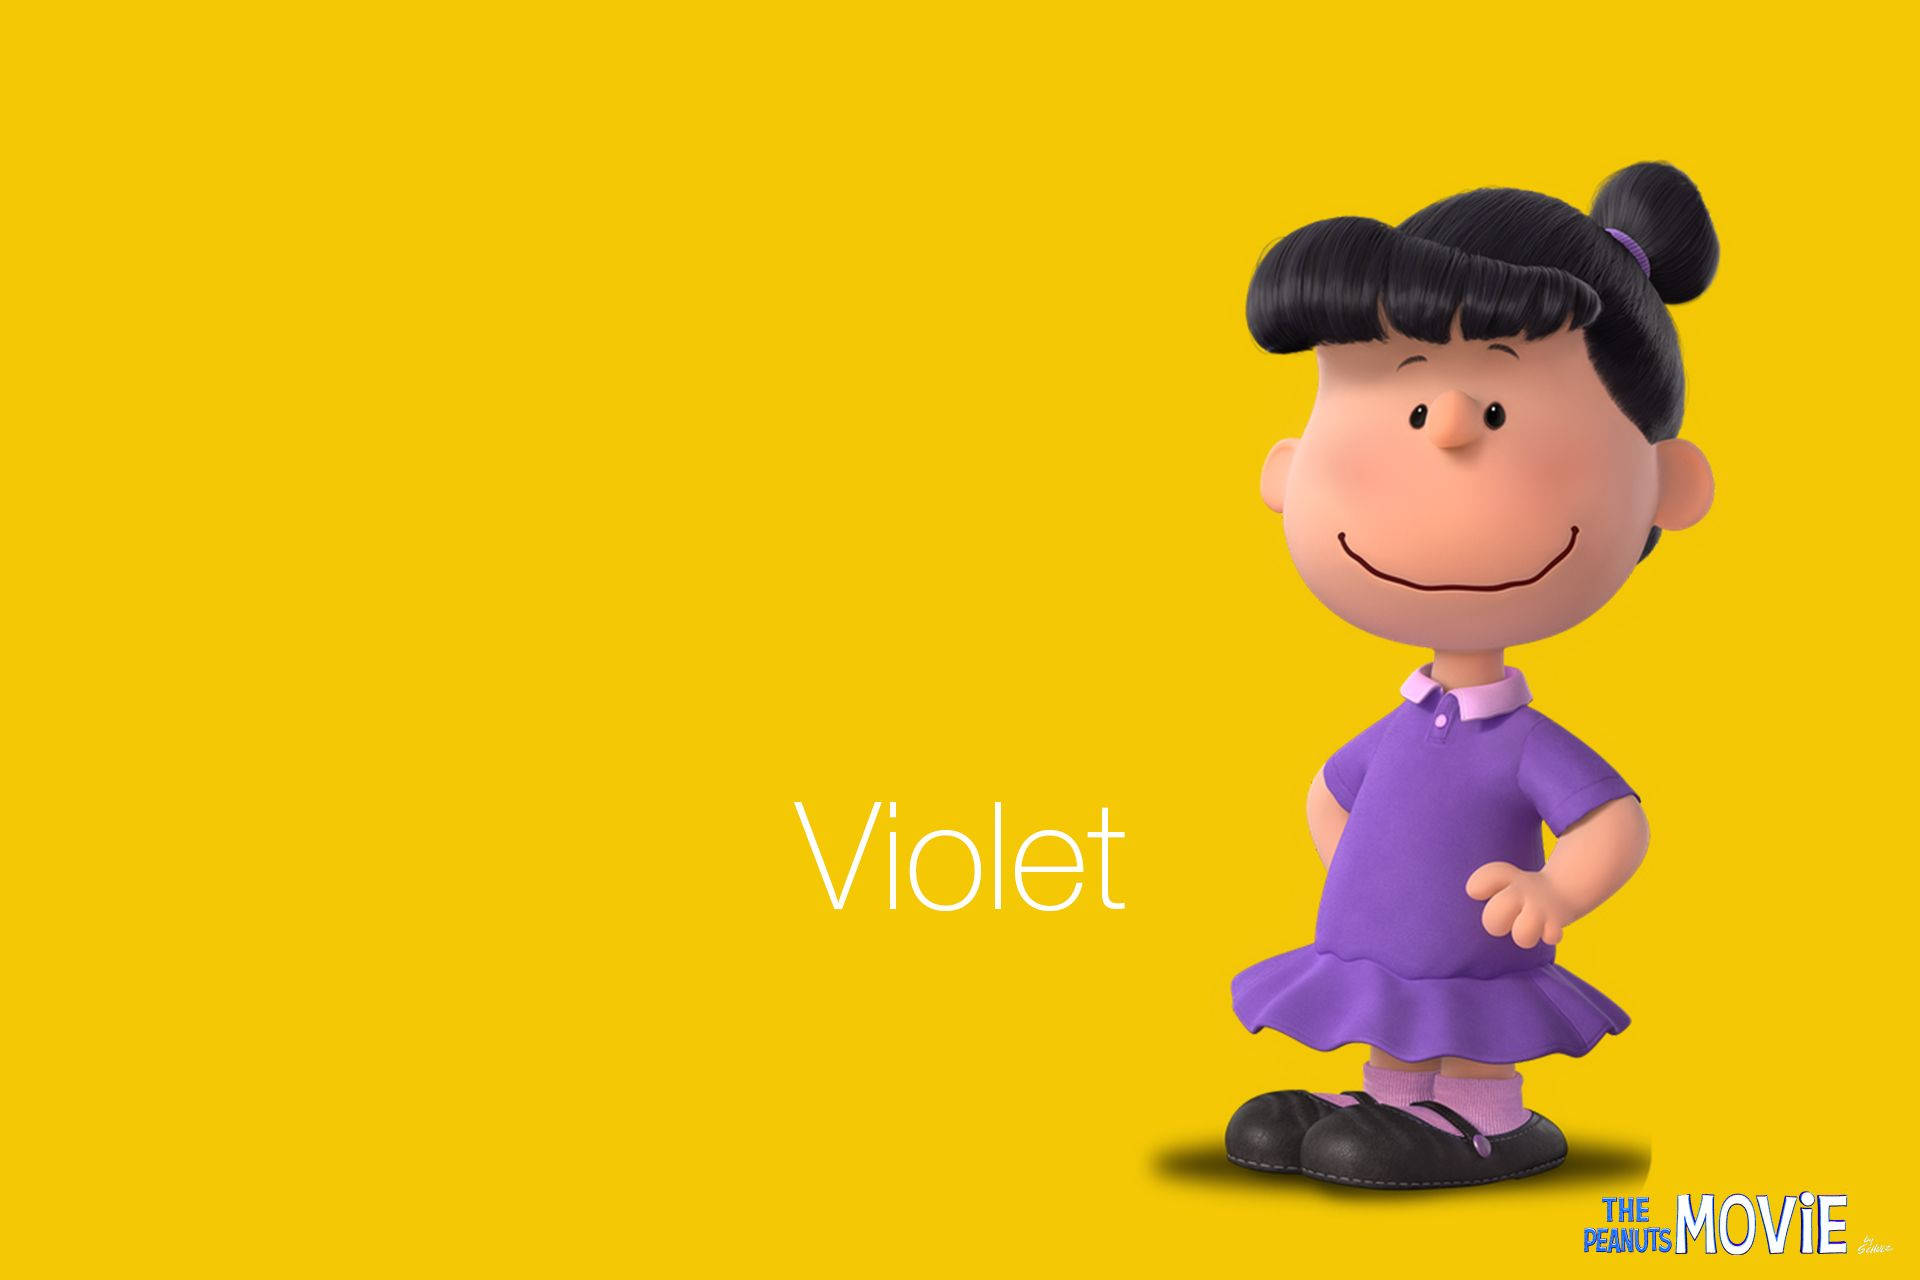 The Peanuts Movie Violet Wallpaper